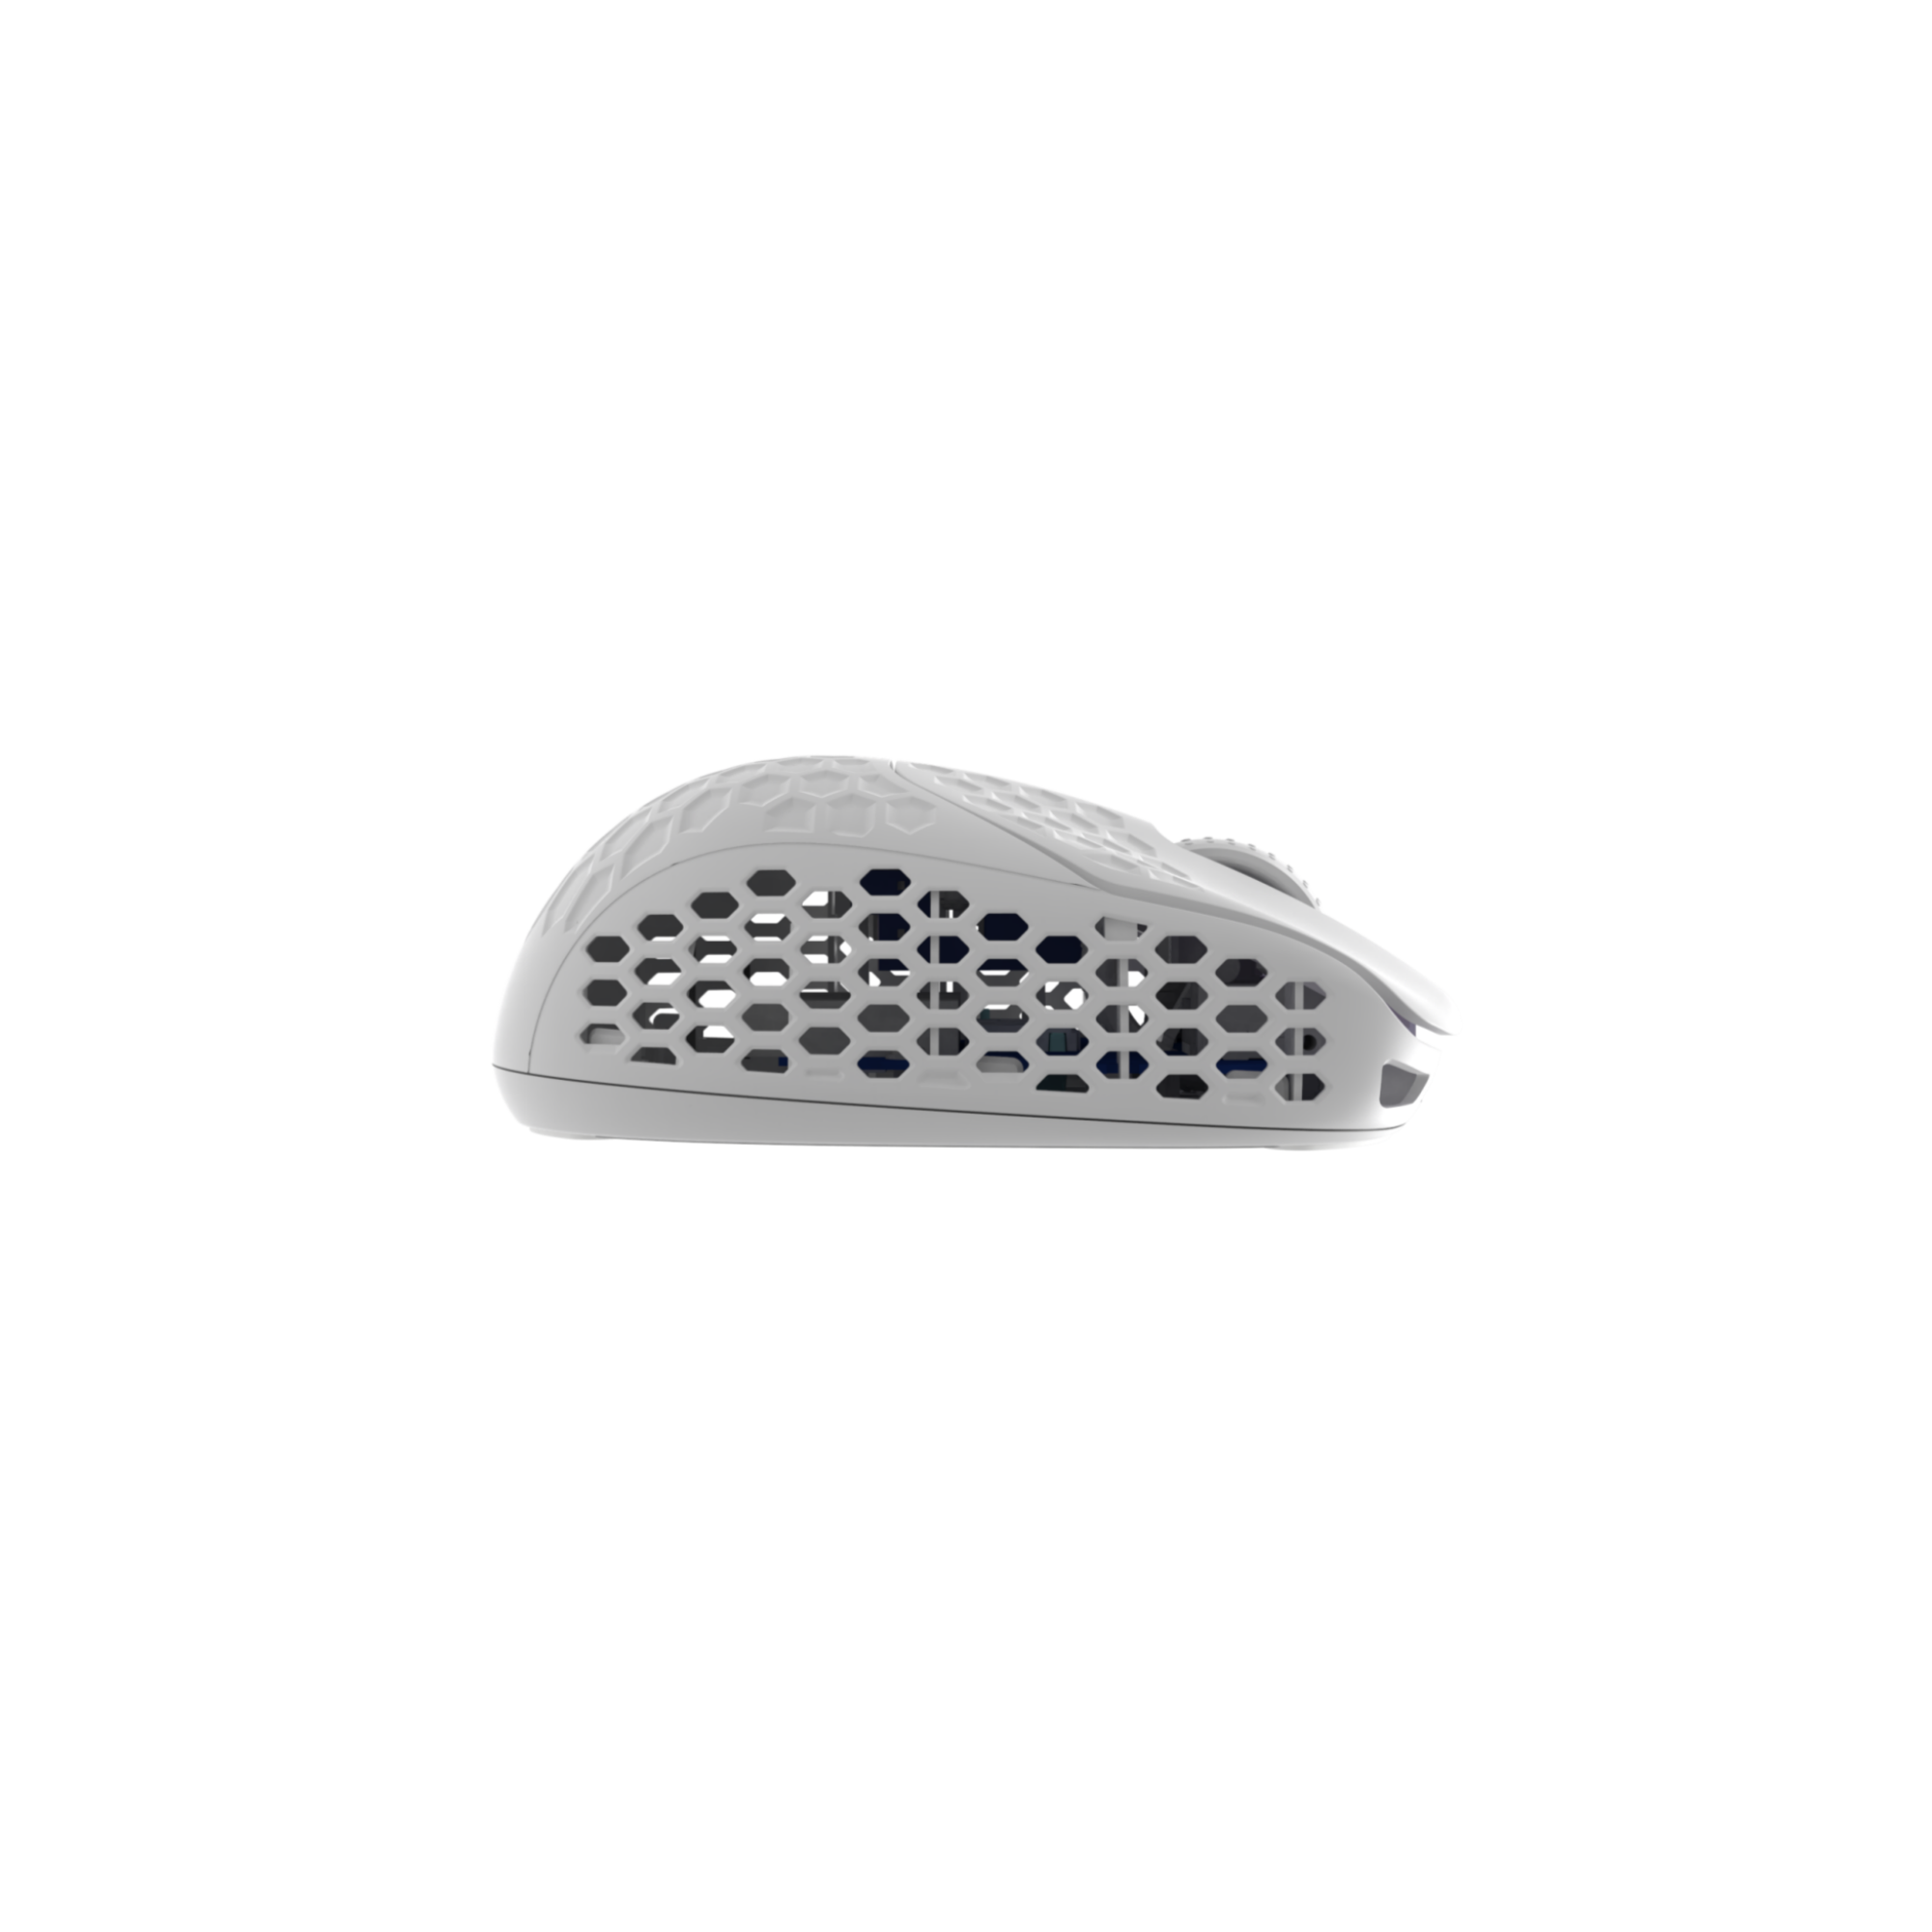 G-Wolves HTR 8K Wireless Mouse ( Pre-Order )